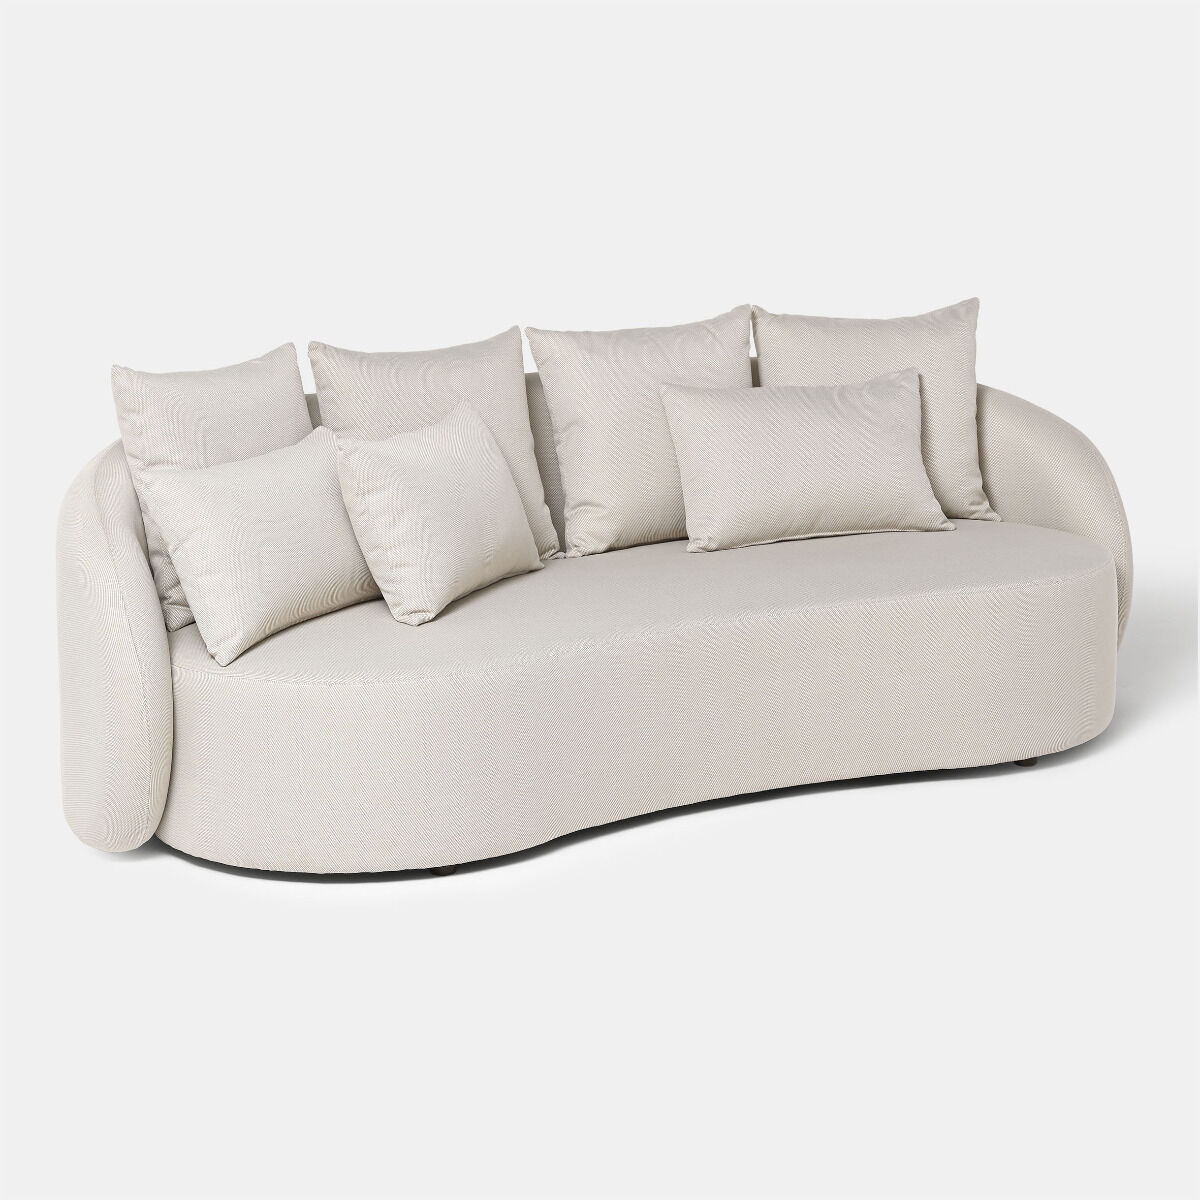 Sofa ogrodowa 2 osobowa Tongo 228x107x74cm off white-beż tkanina Olefin Miloo Home